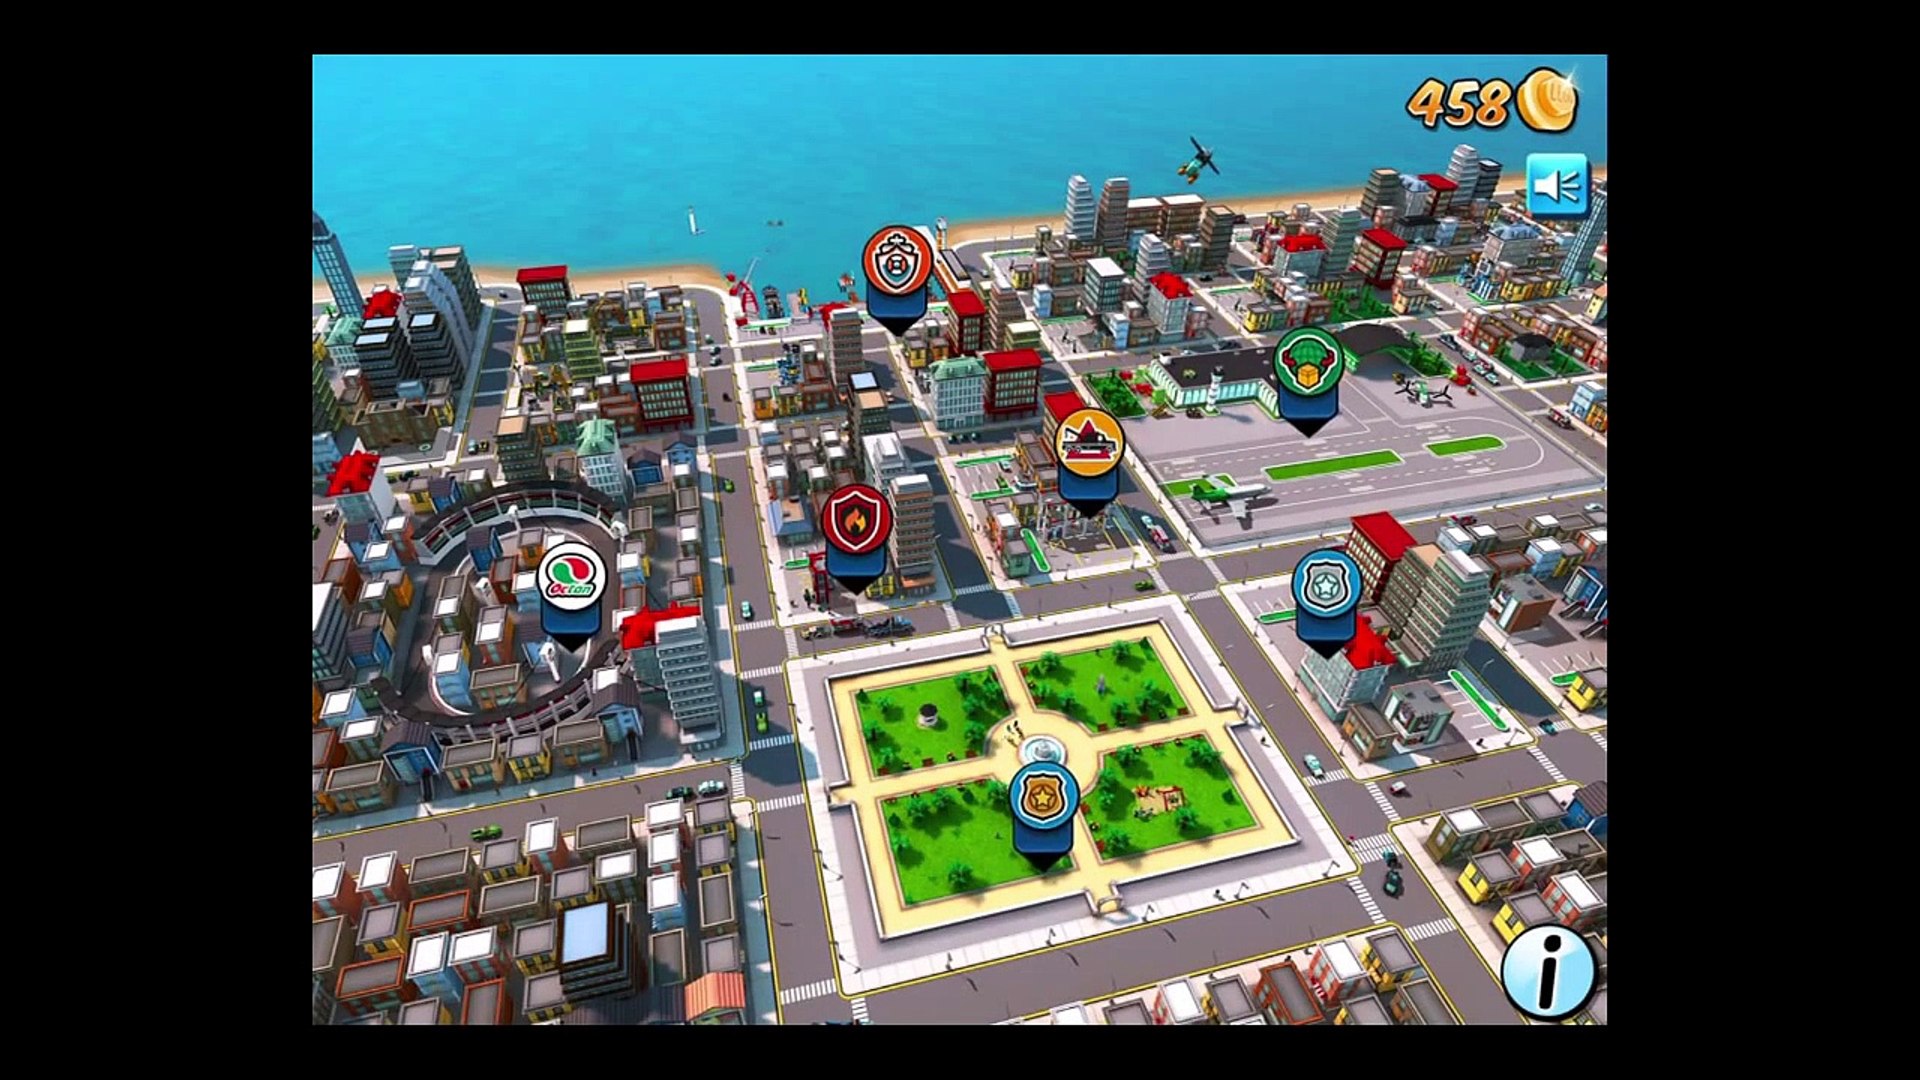 LEGO City City iOS Free App (iPhone/iPad) Games 7 LEGO Themes - video Dailymotion